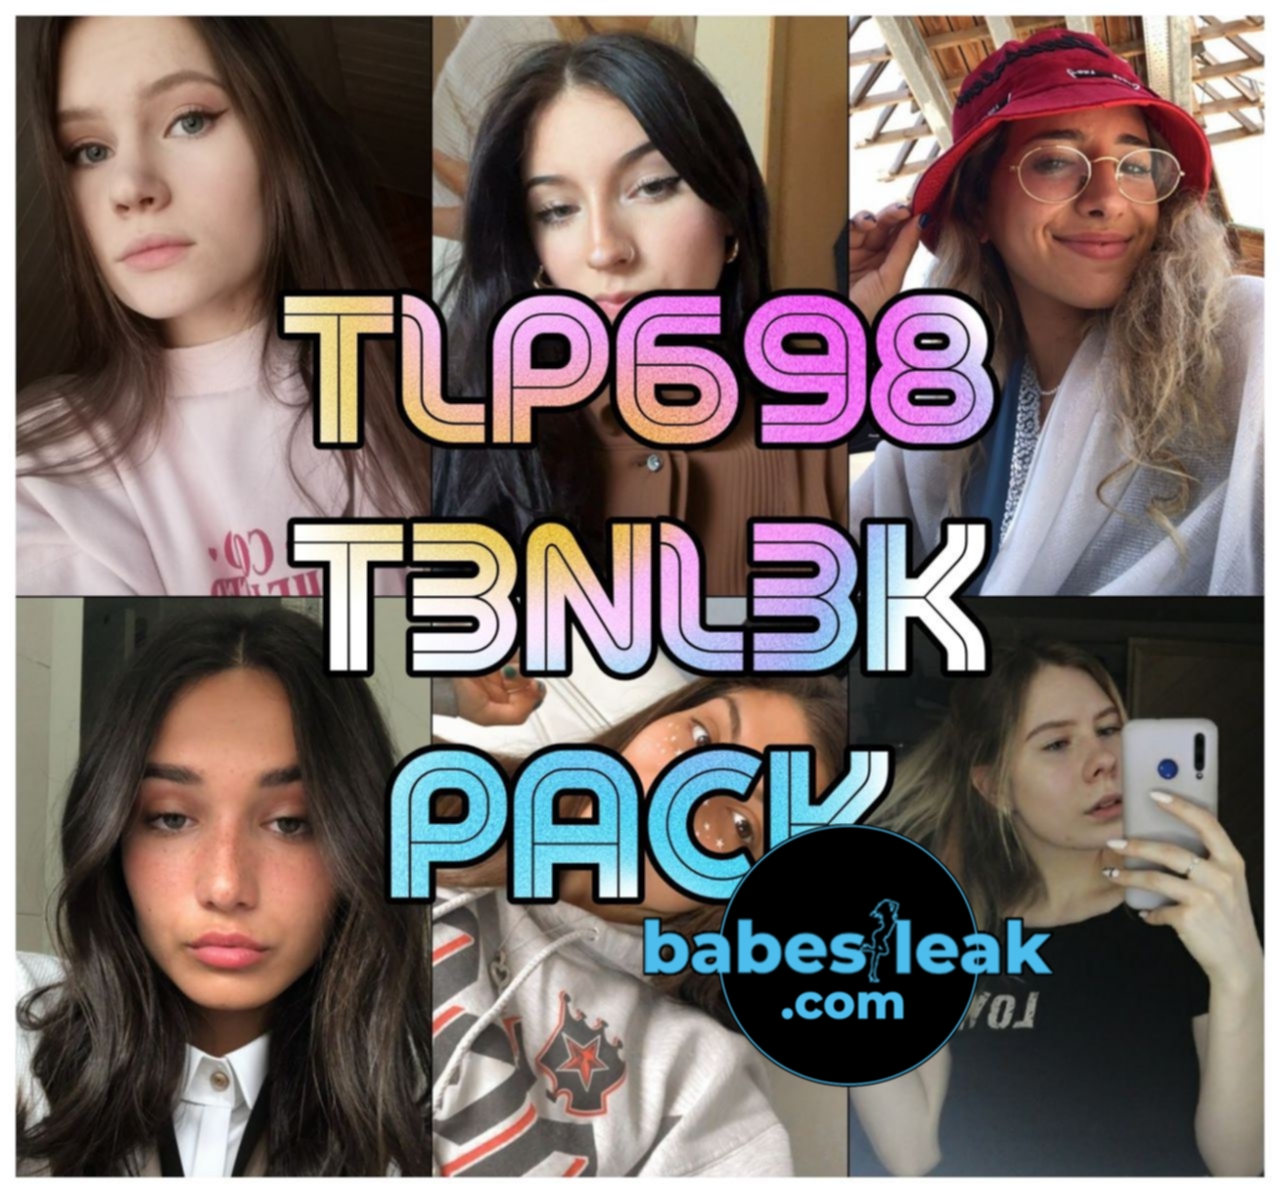 15 Albums Statewins Teen Leak Pack TLP698 OnlyFans Leaks Snapchat